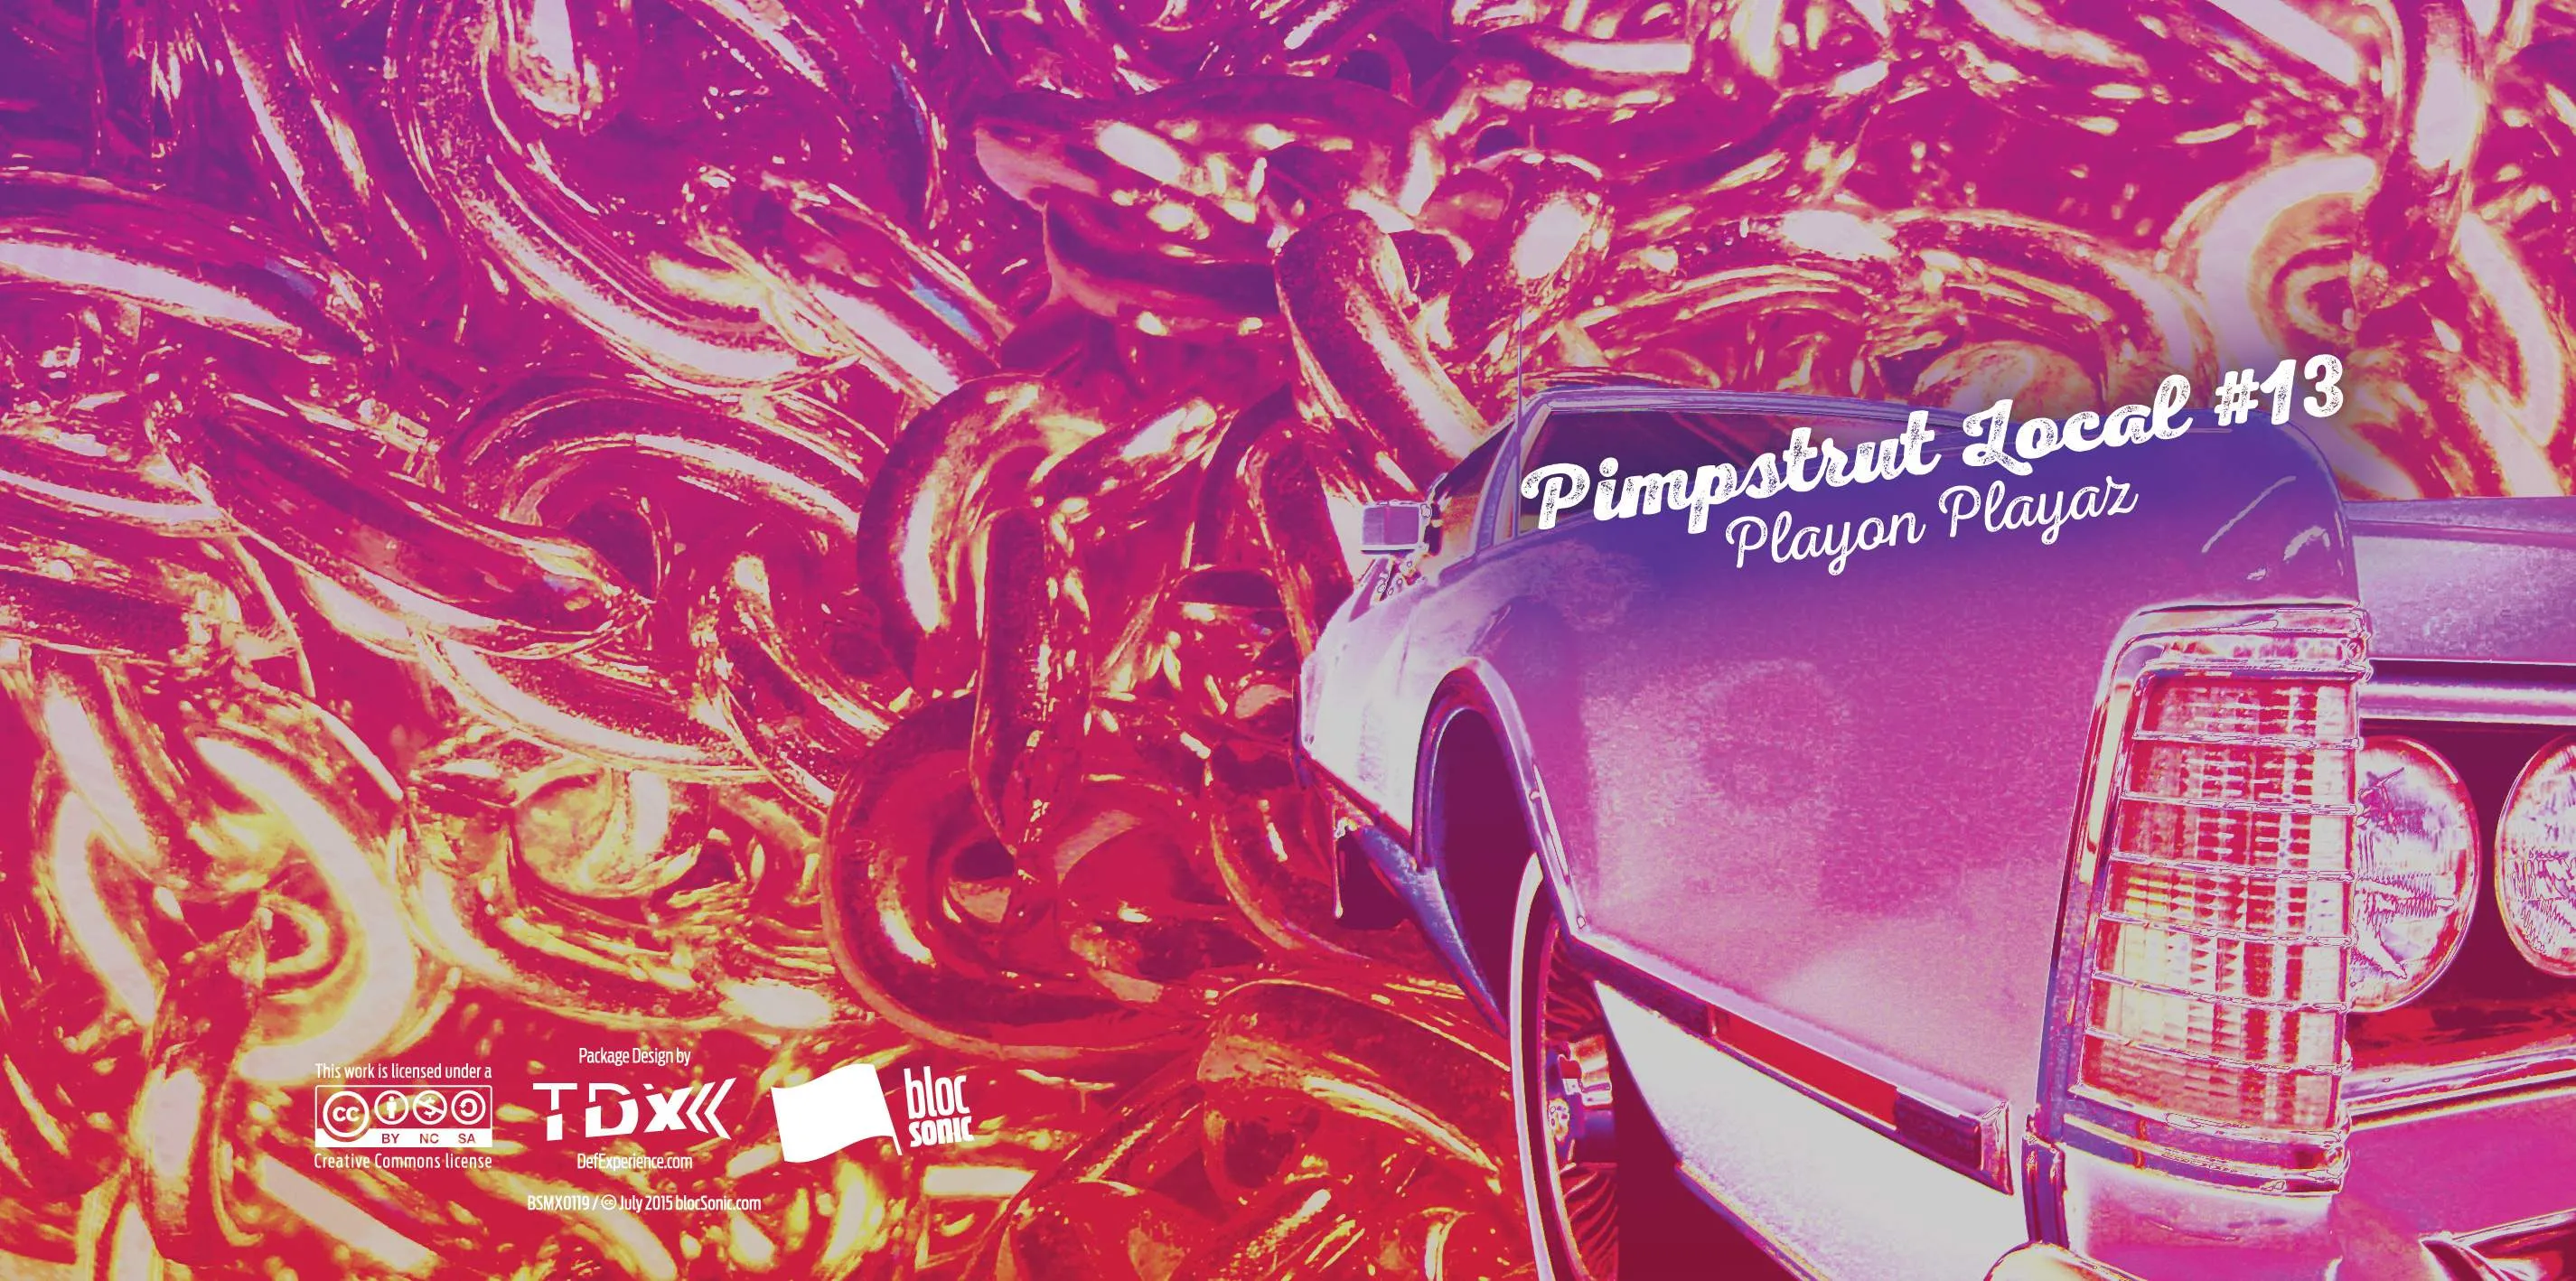 Album insert for “Playon Playaz” by Pimpstrut Local #13